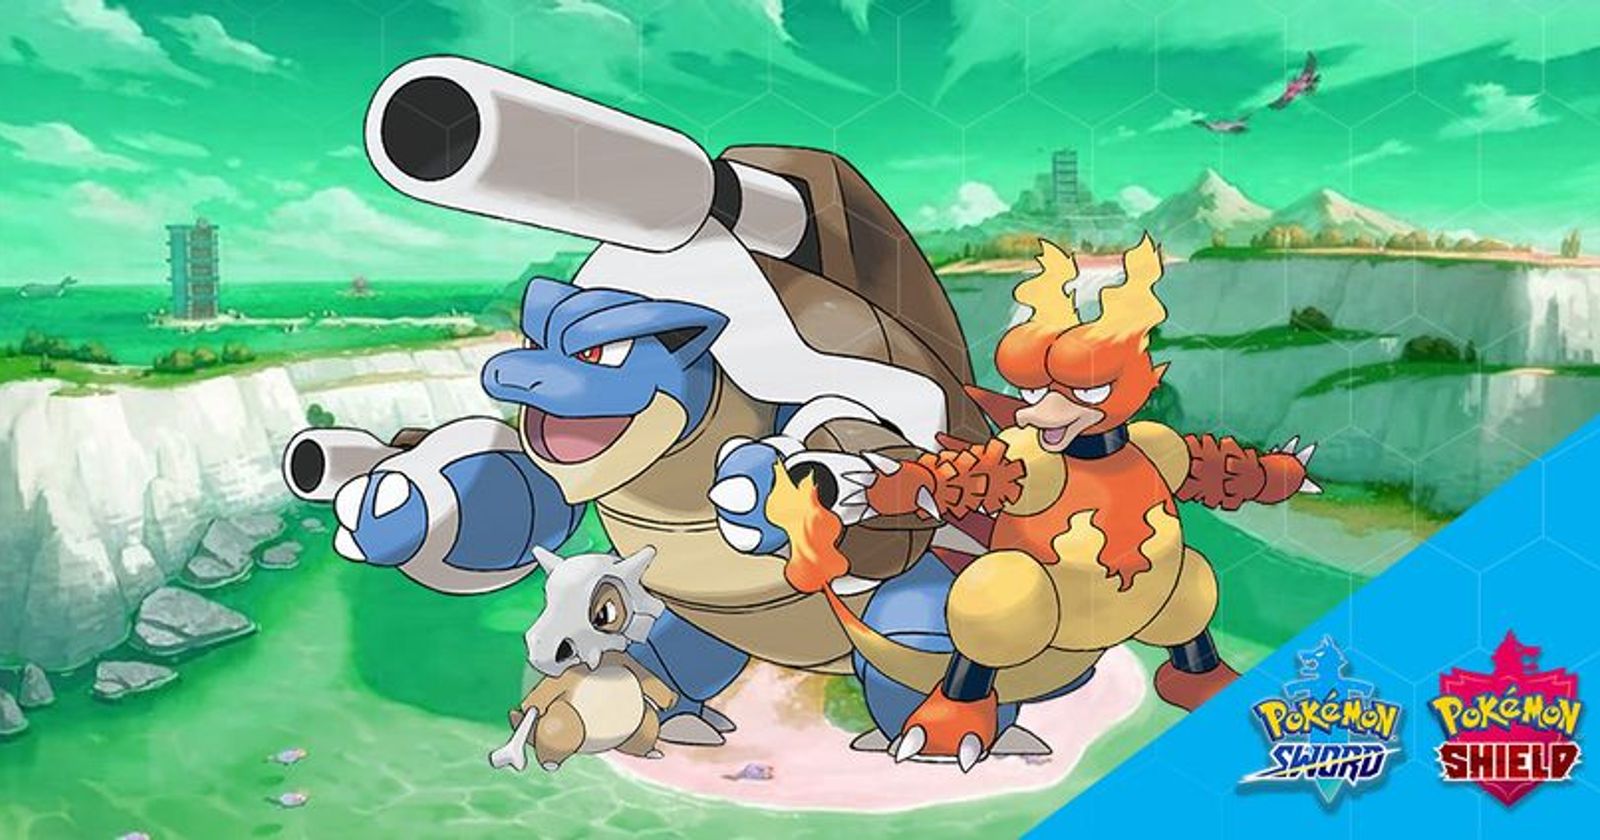 Pokémon Sword and Shield Isle of Armor: Returning Pokémon and the